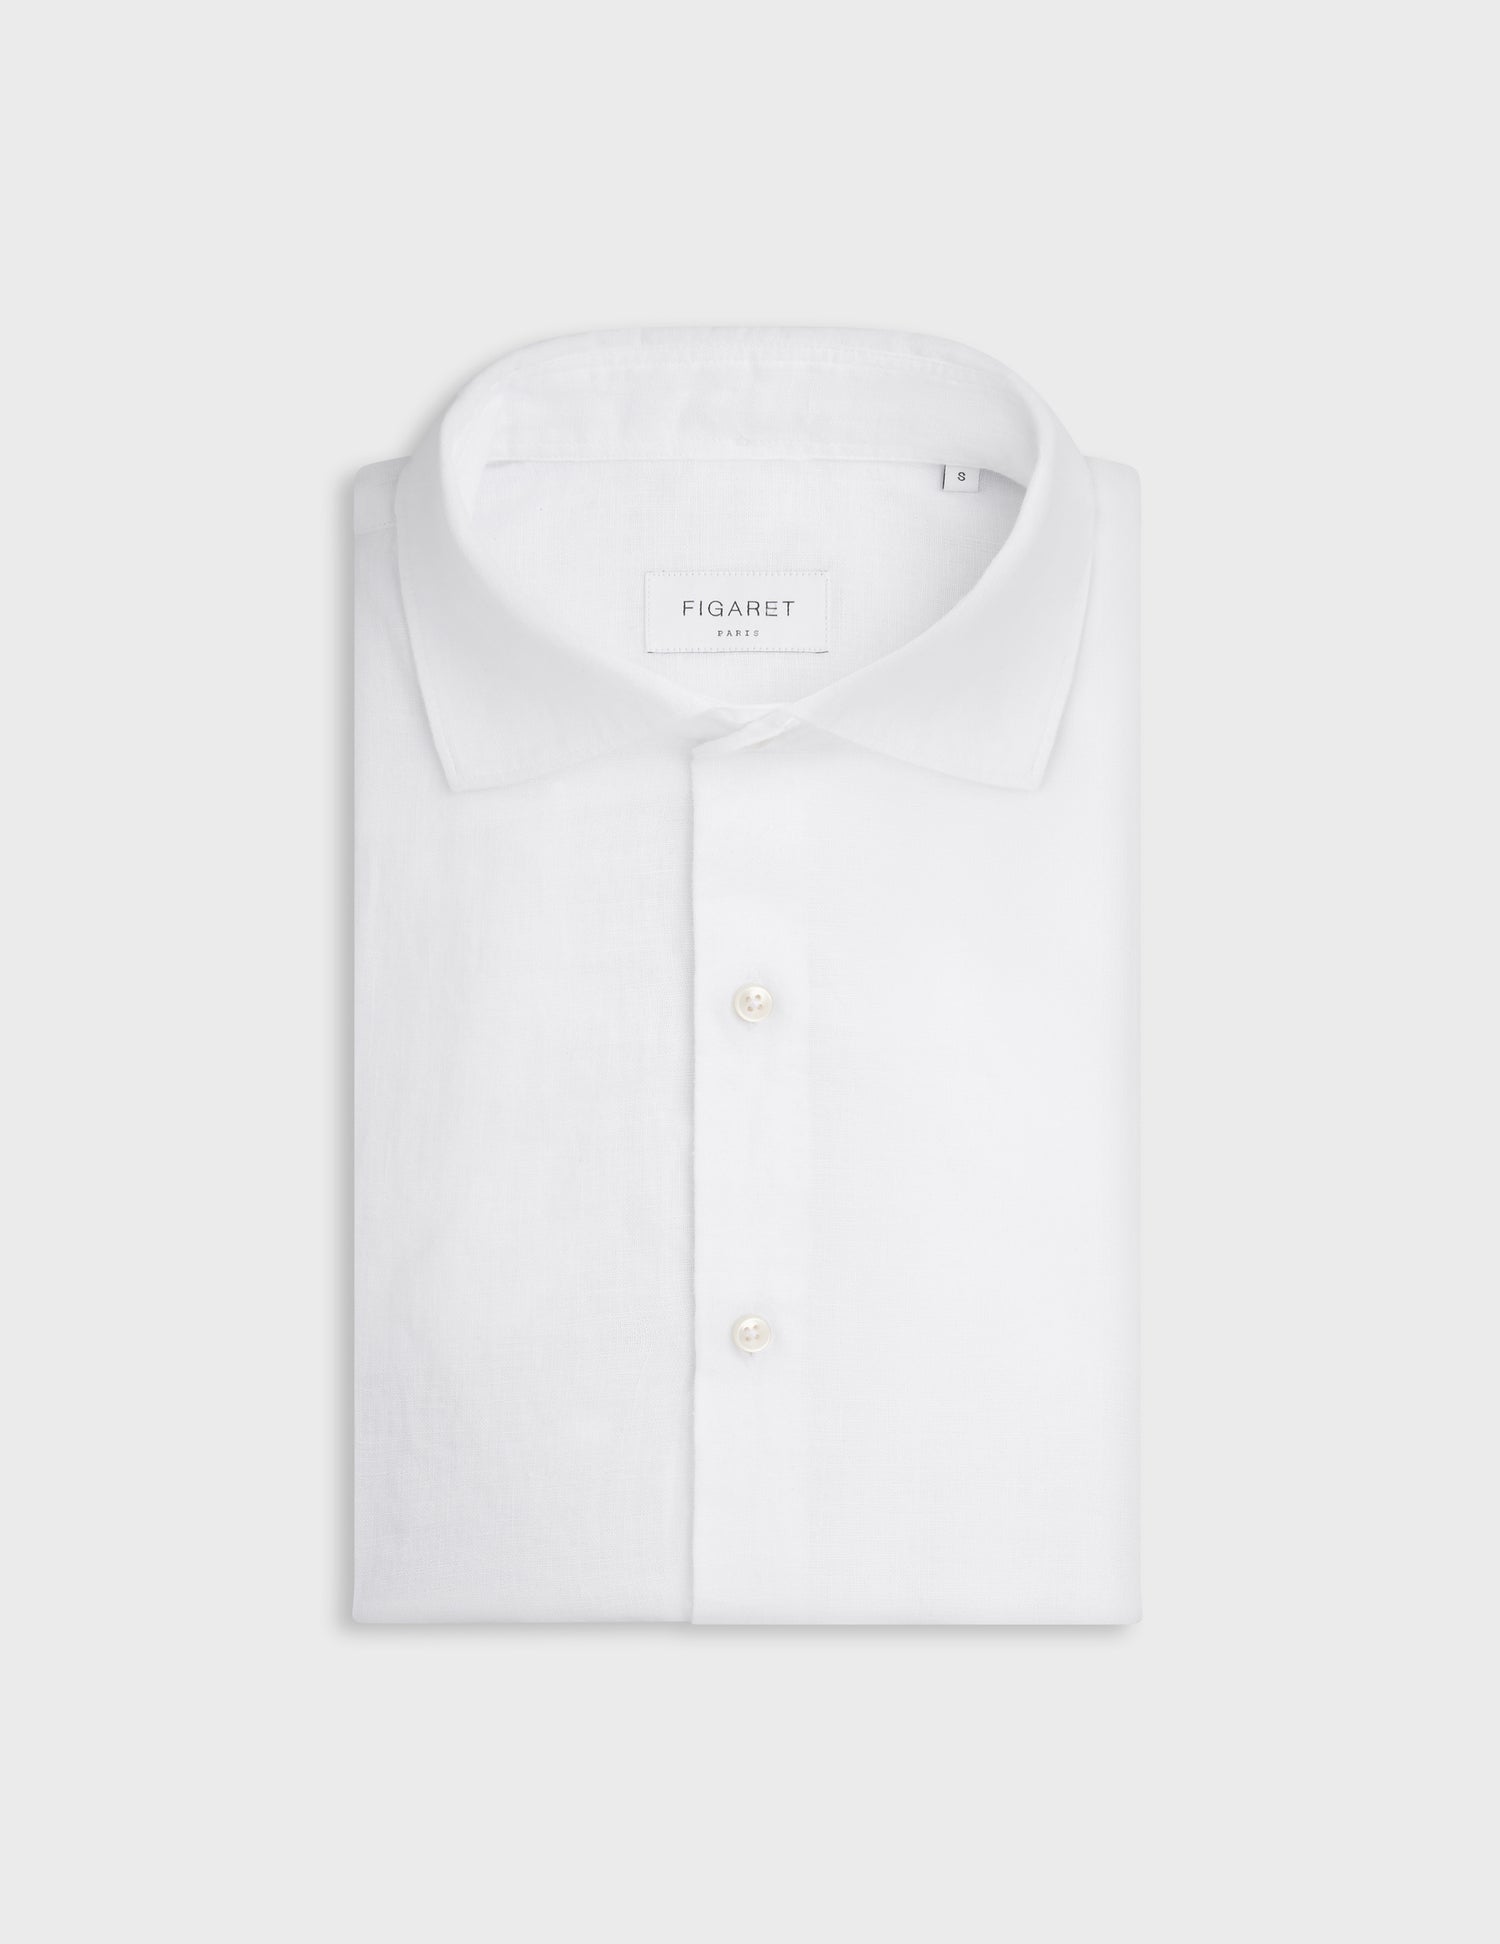 Aristote shirt in white linen - Linen - Italian Collar#3